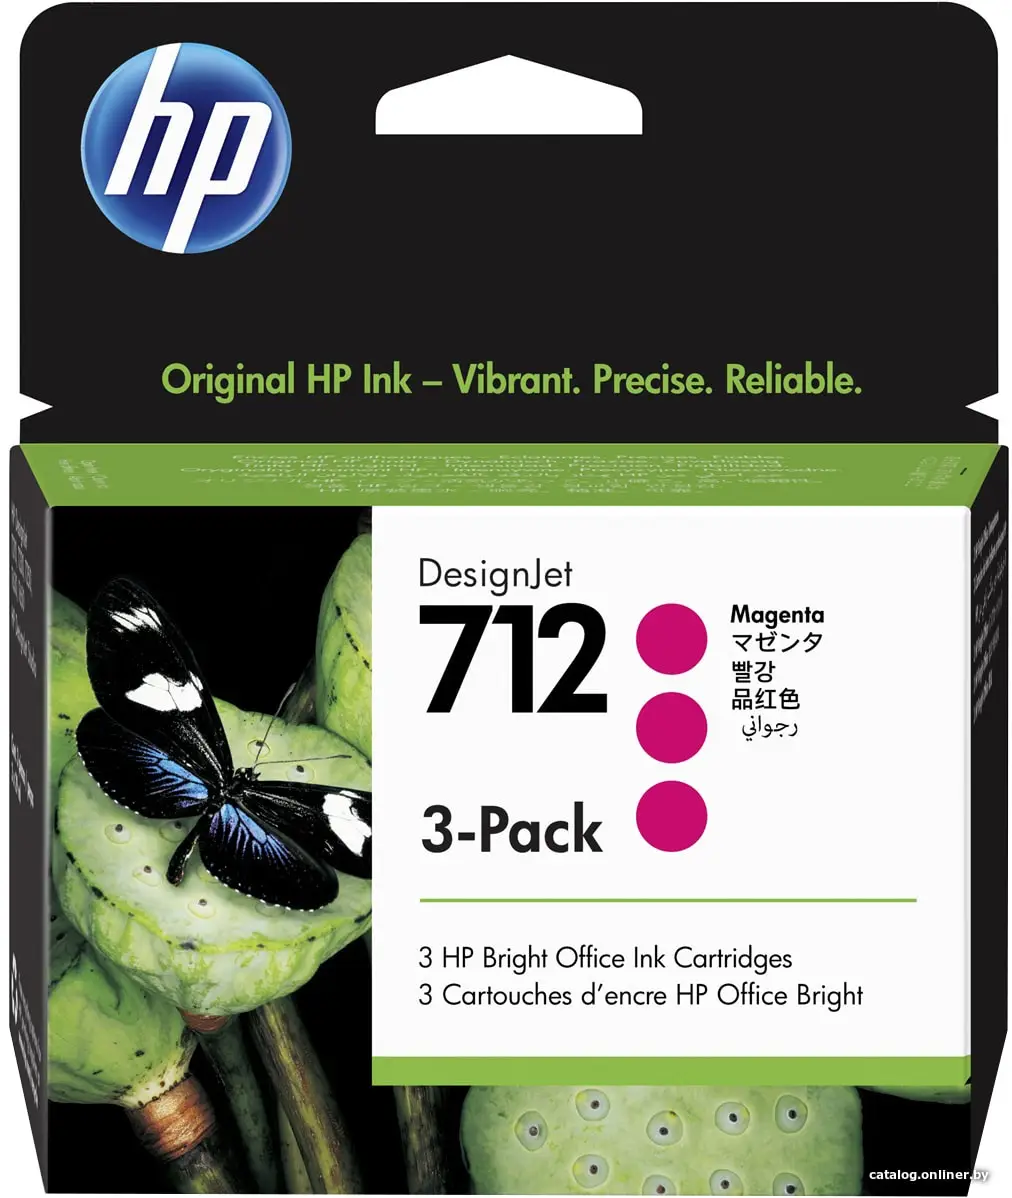 Купить HP 712 3-Pack 29-ml Magenta DesignJet Ink Cartridge картридж, цена, опт и розница